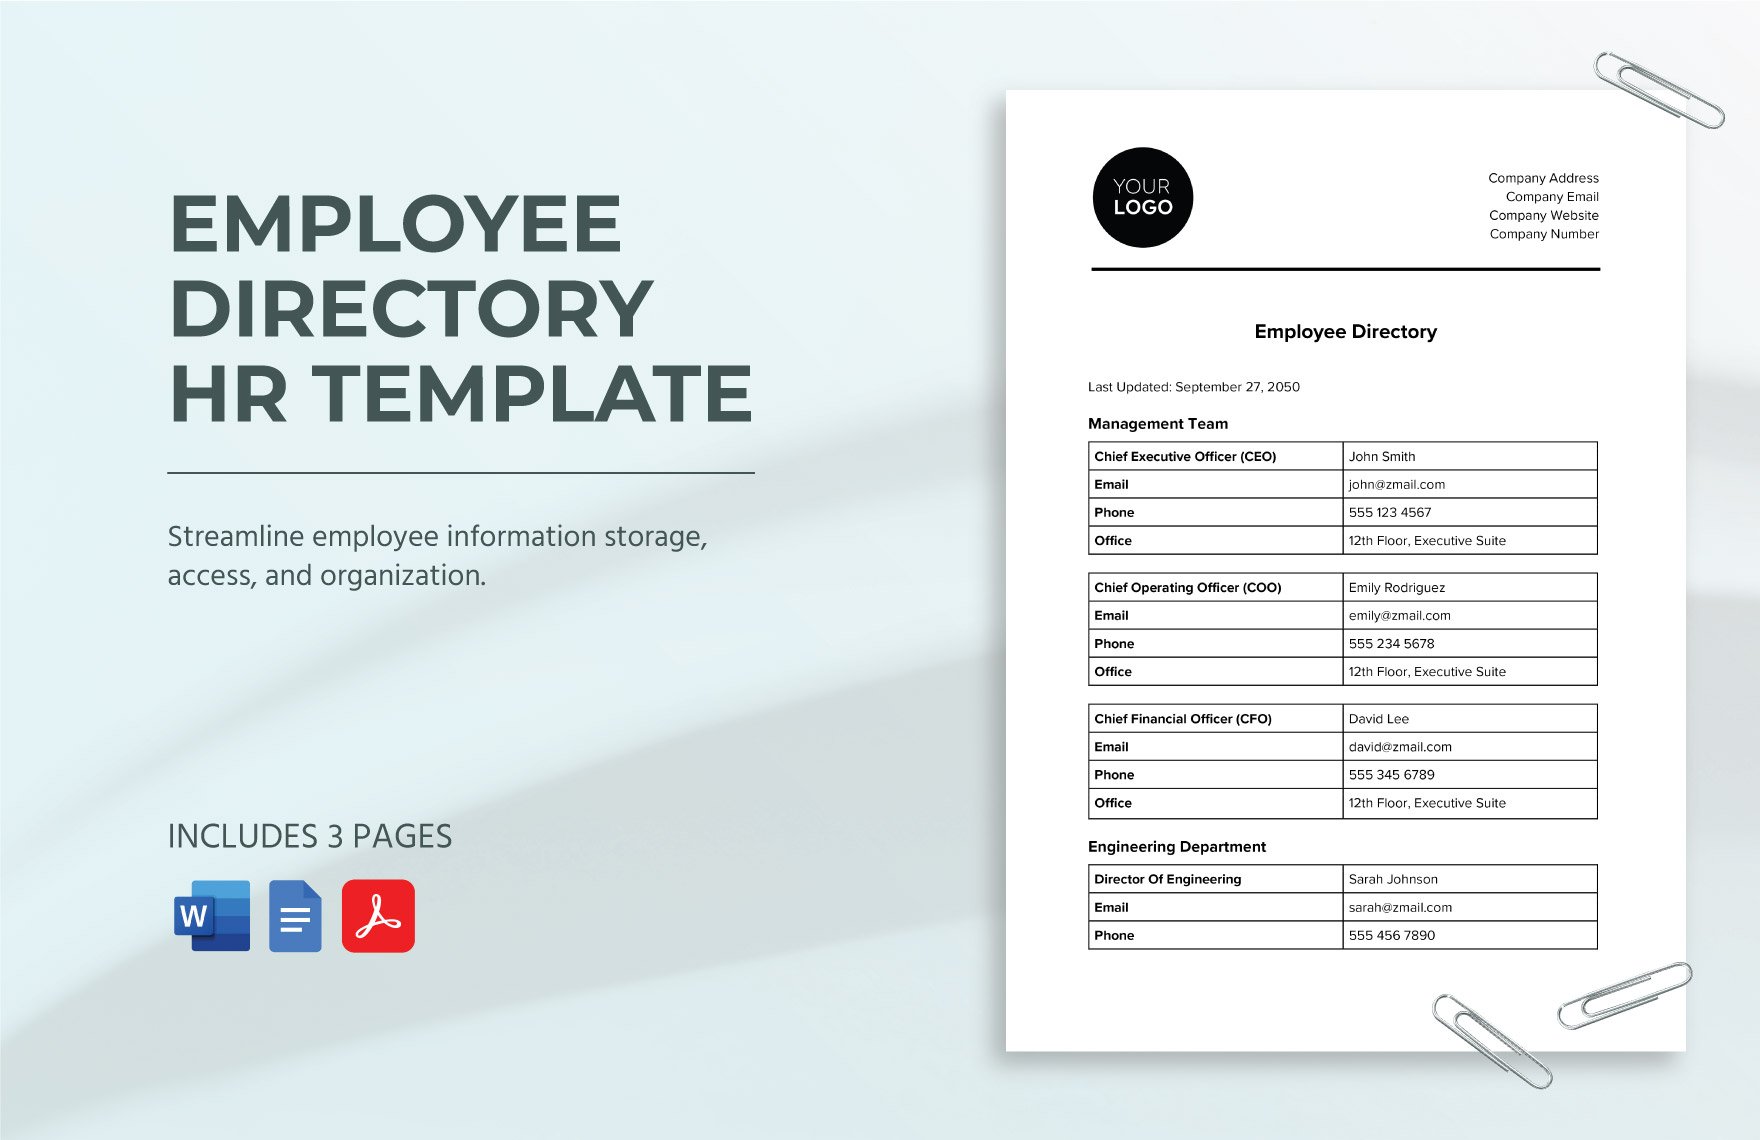 Employee Directory HR Template